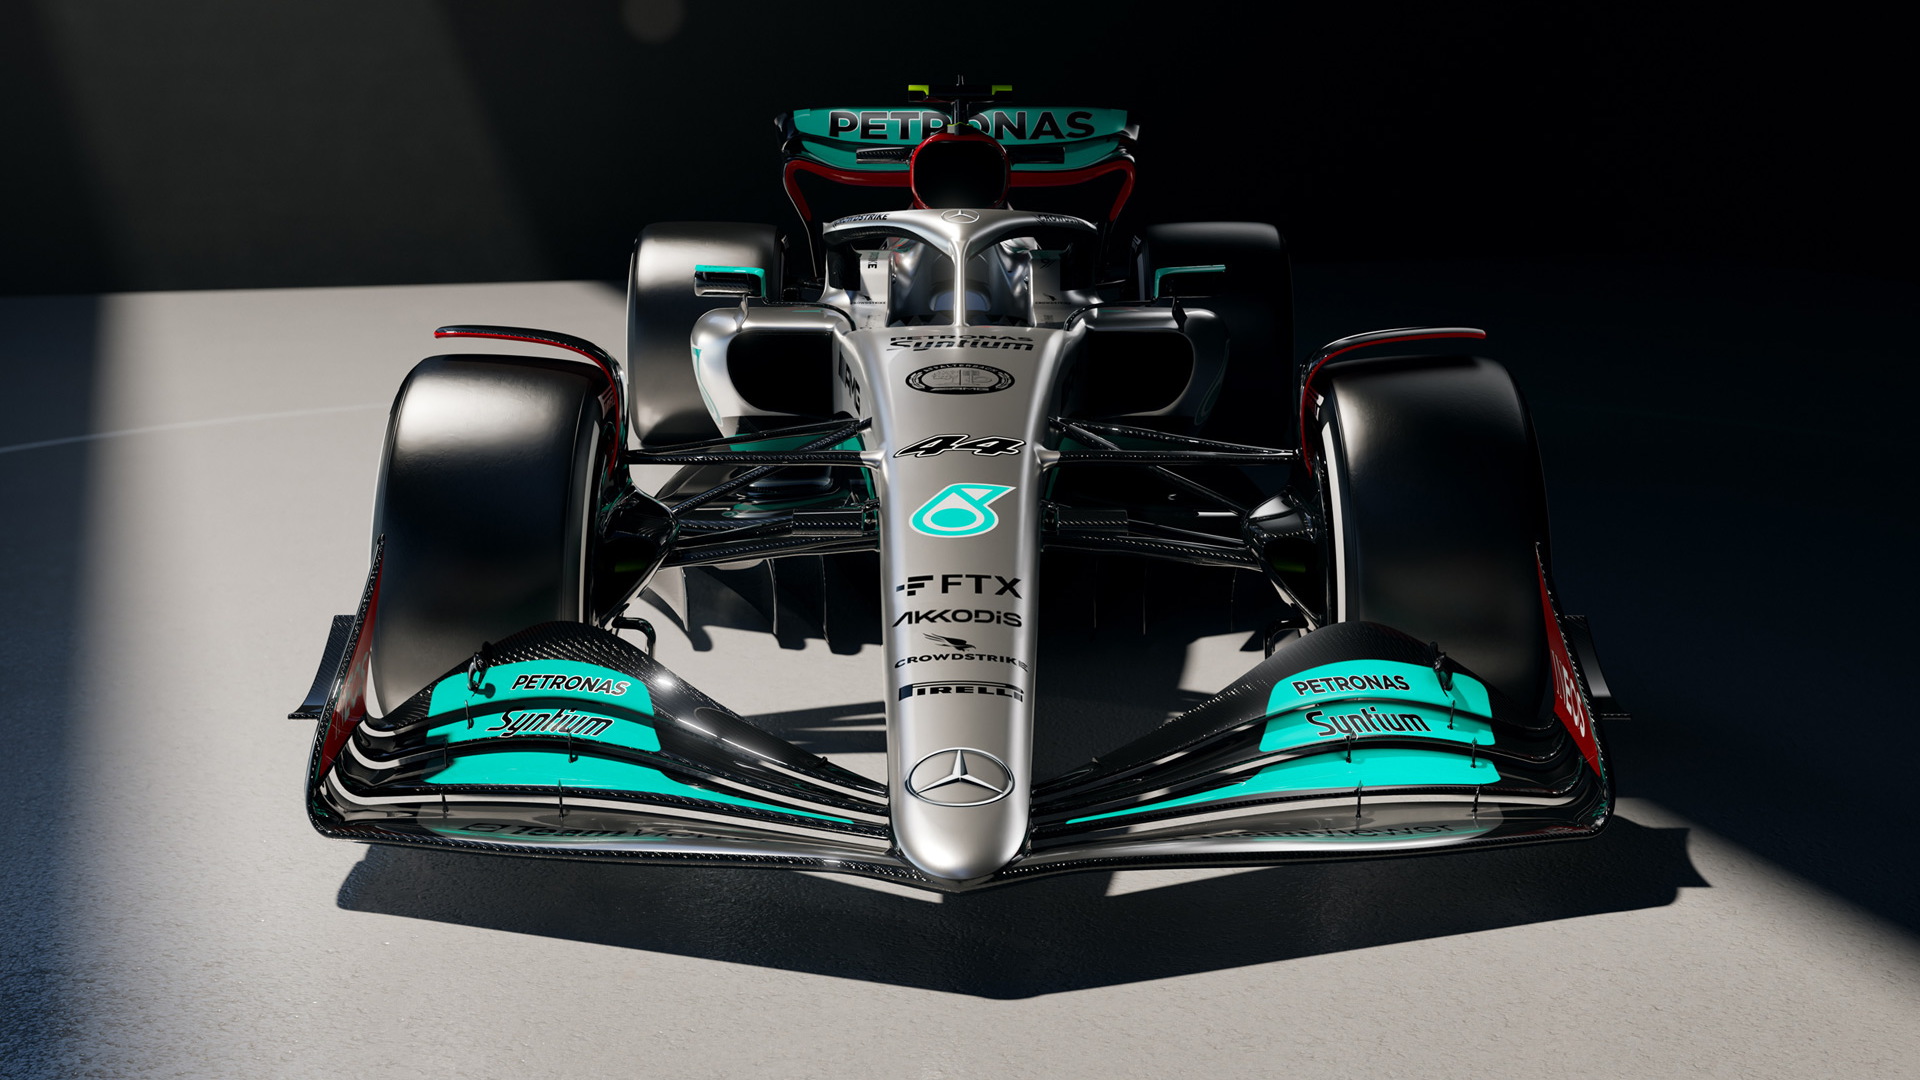 2022 Mercedes-Benz AMG W13 E Performance Formula One race car